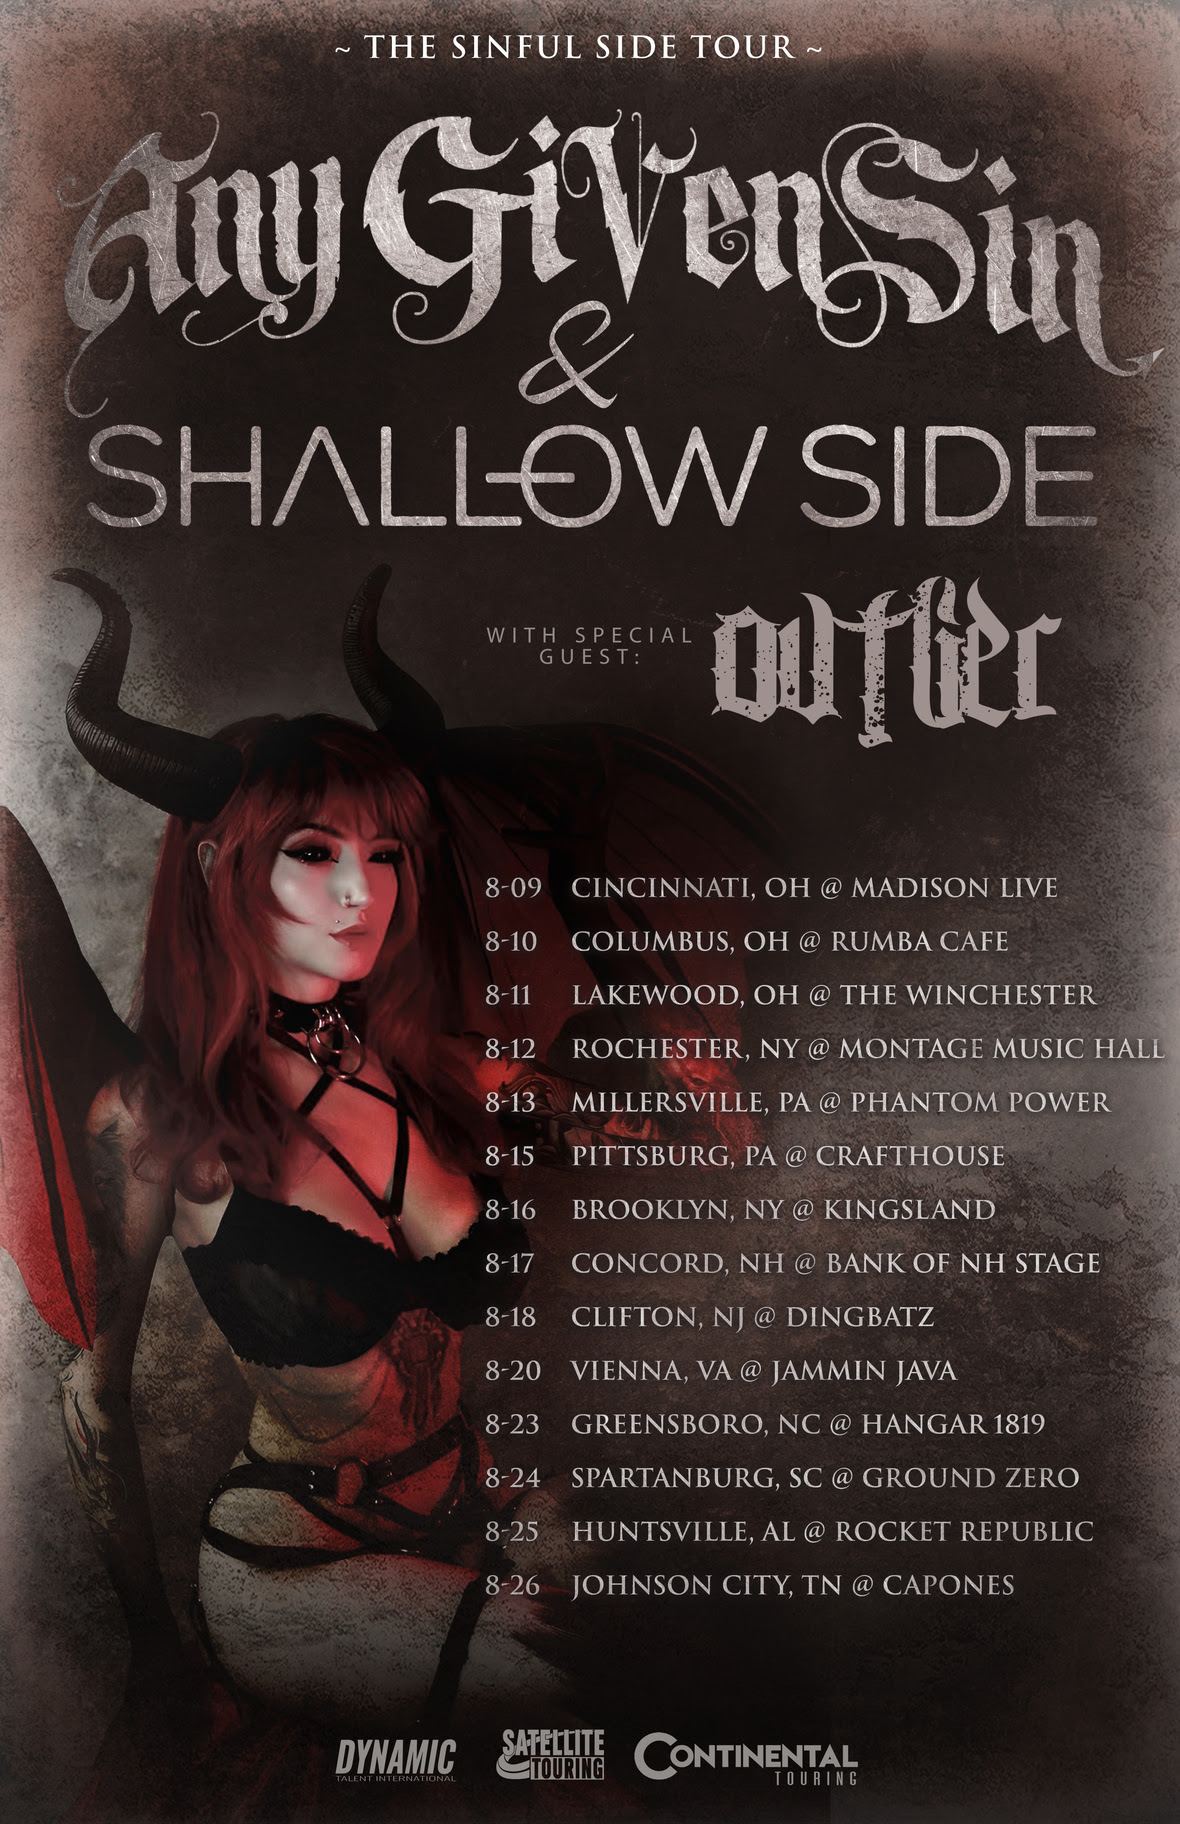 Sinful Side Tour Admat w DATES 1 